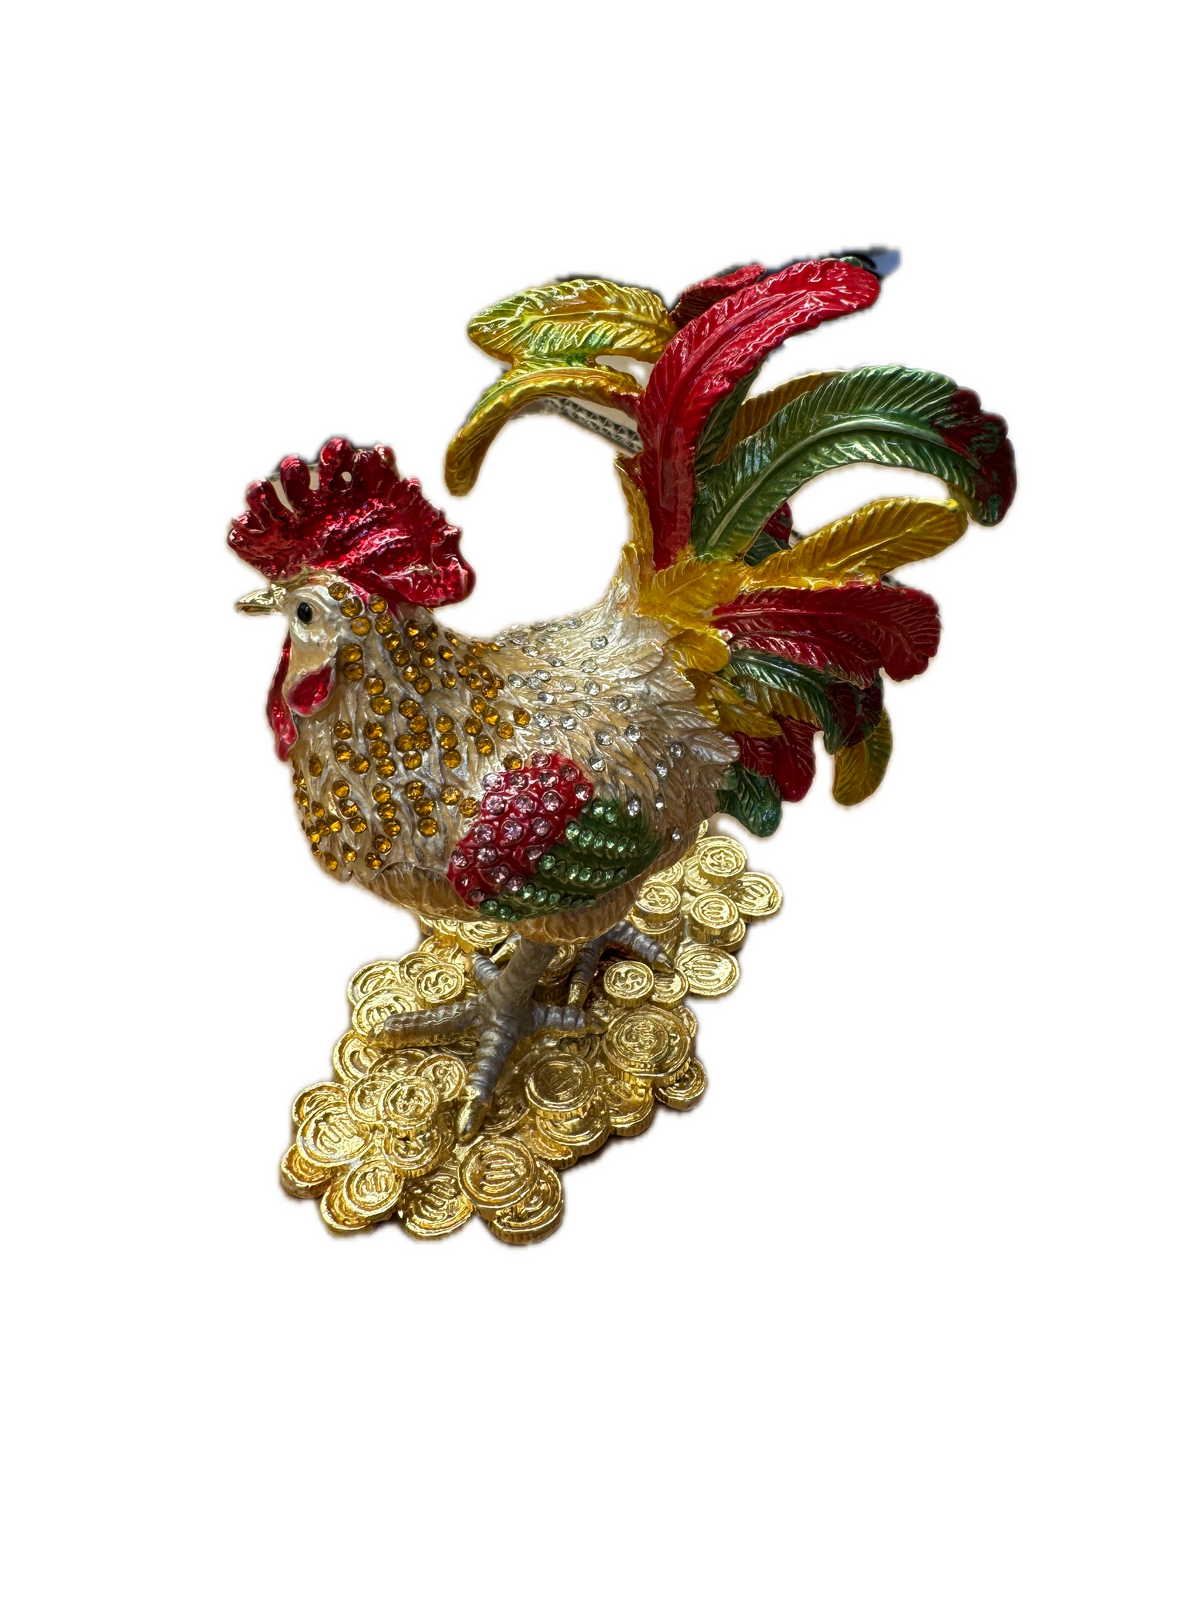 ROOSTER TRINKET JEWELLERY BOX Figurine Home Decor Ornament Chicken Jewelled New